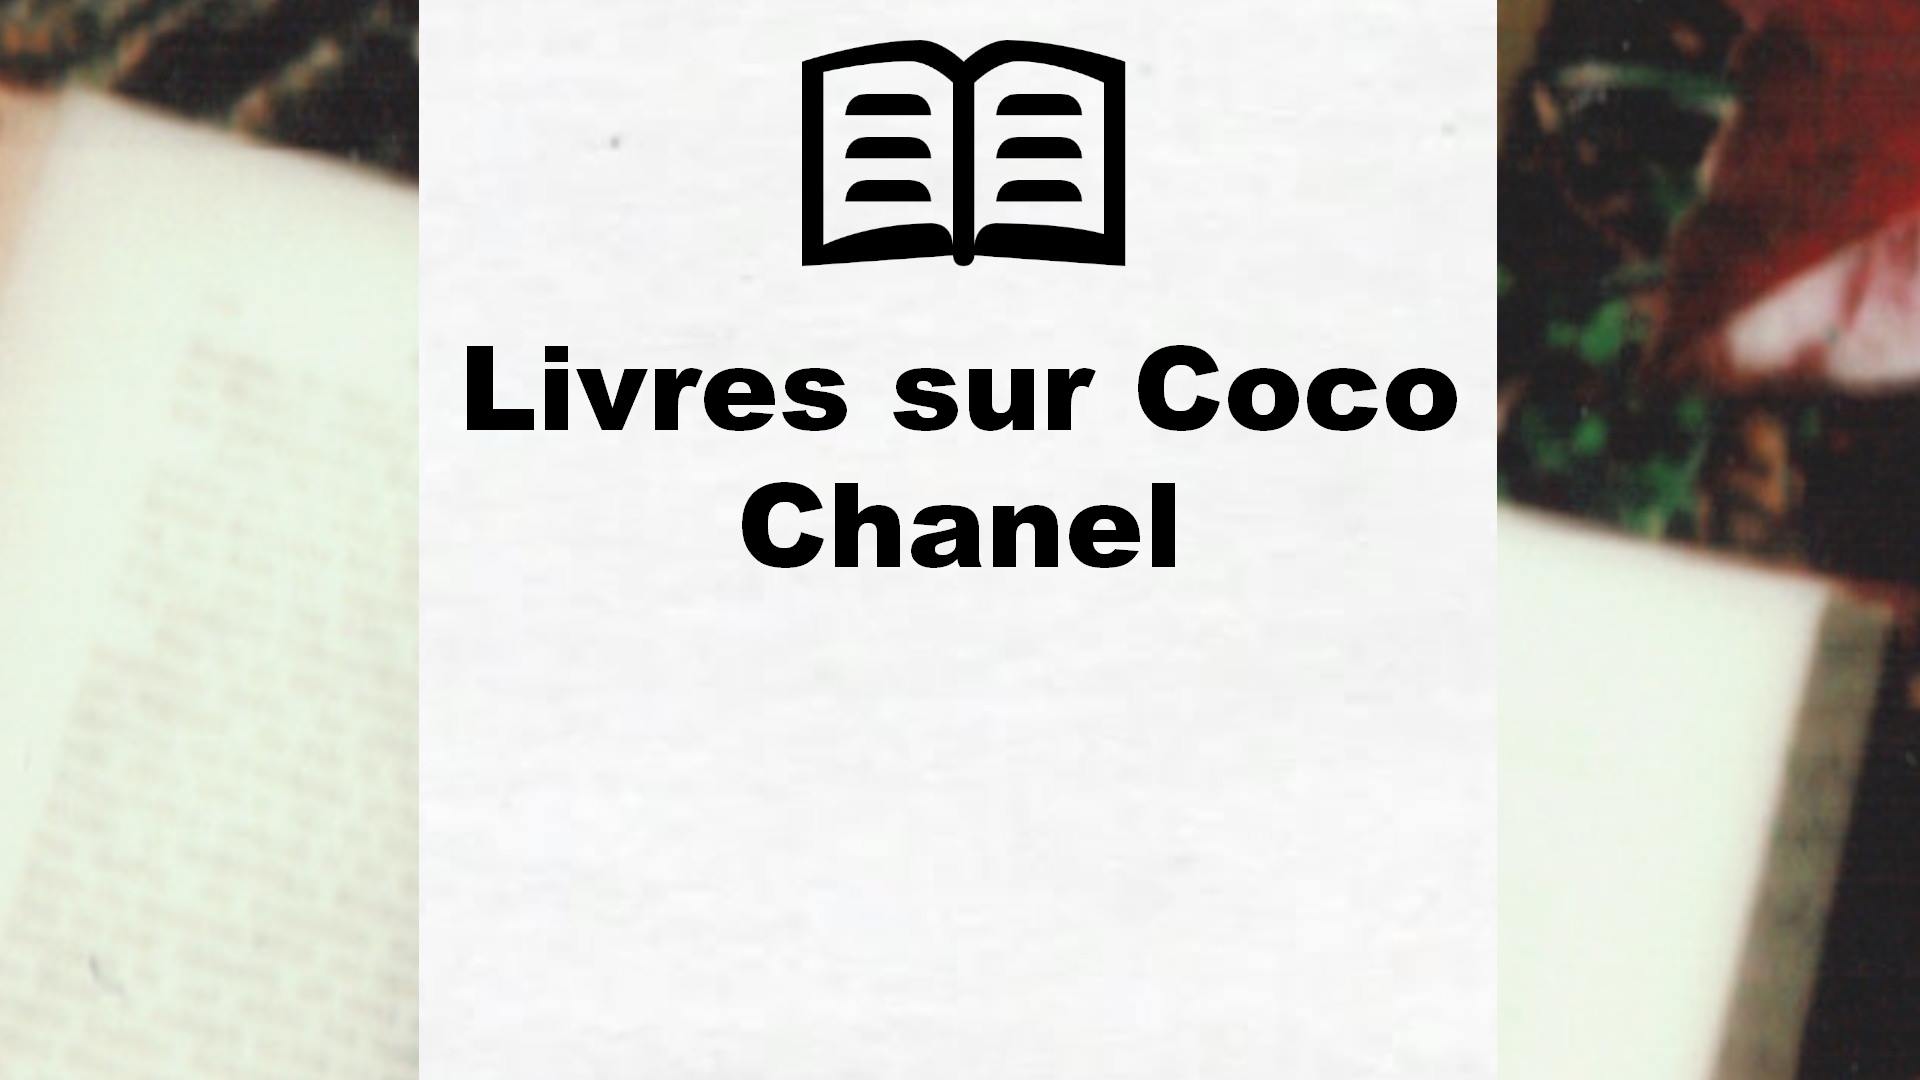 Livres sur Coco Chanel